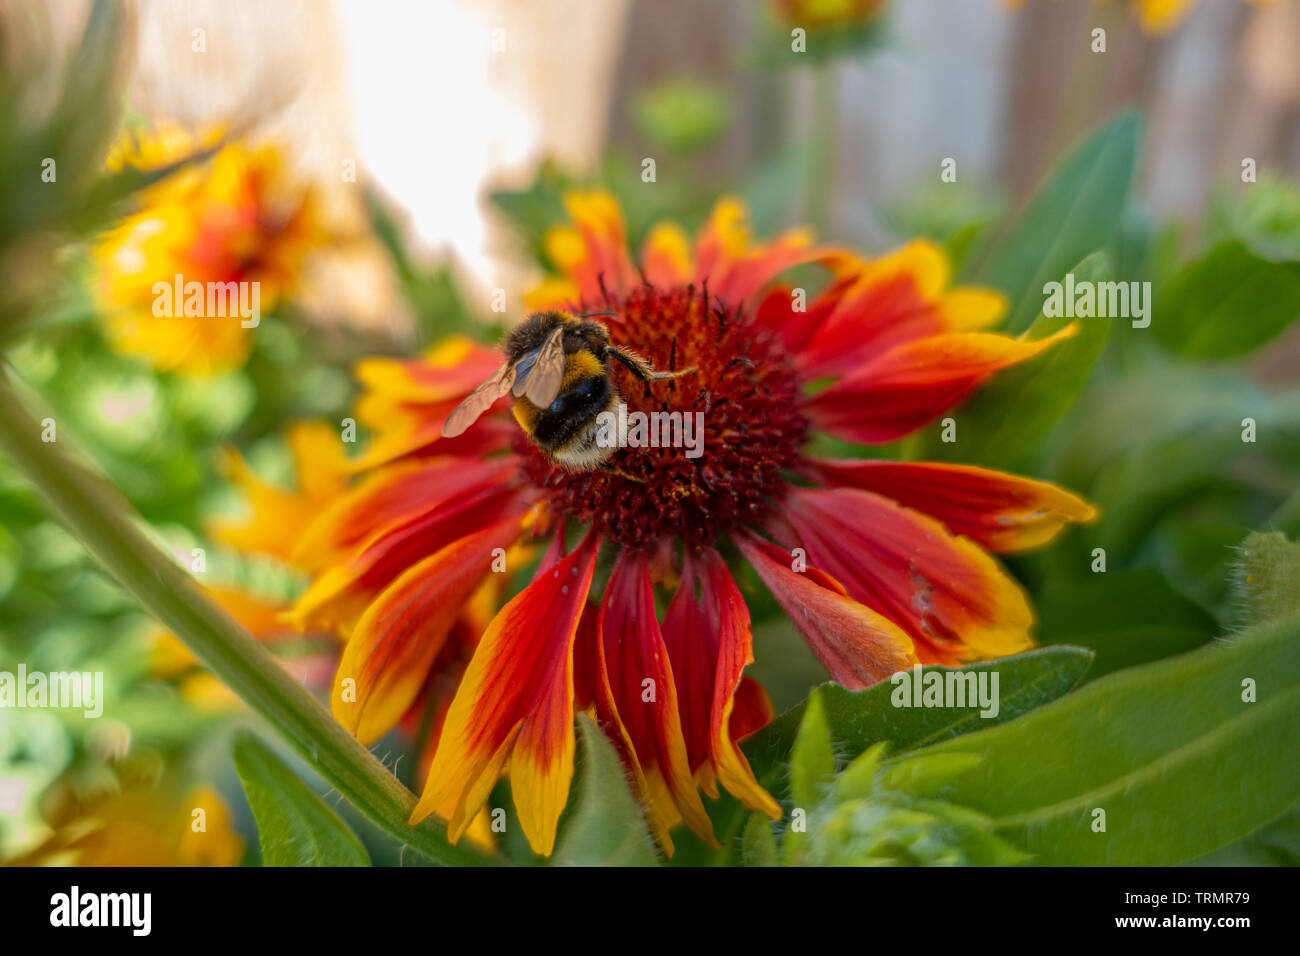 A bumblebee on Gaillardia 'Goblin' flowers in a garden. Stock Photo